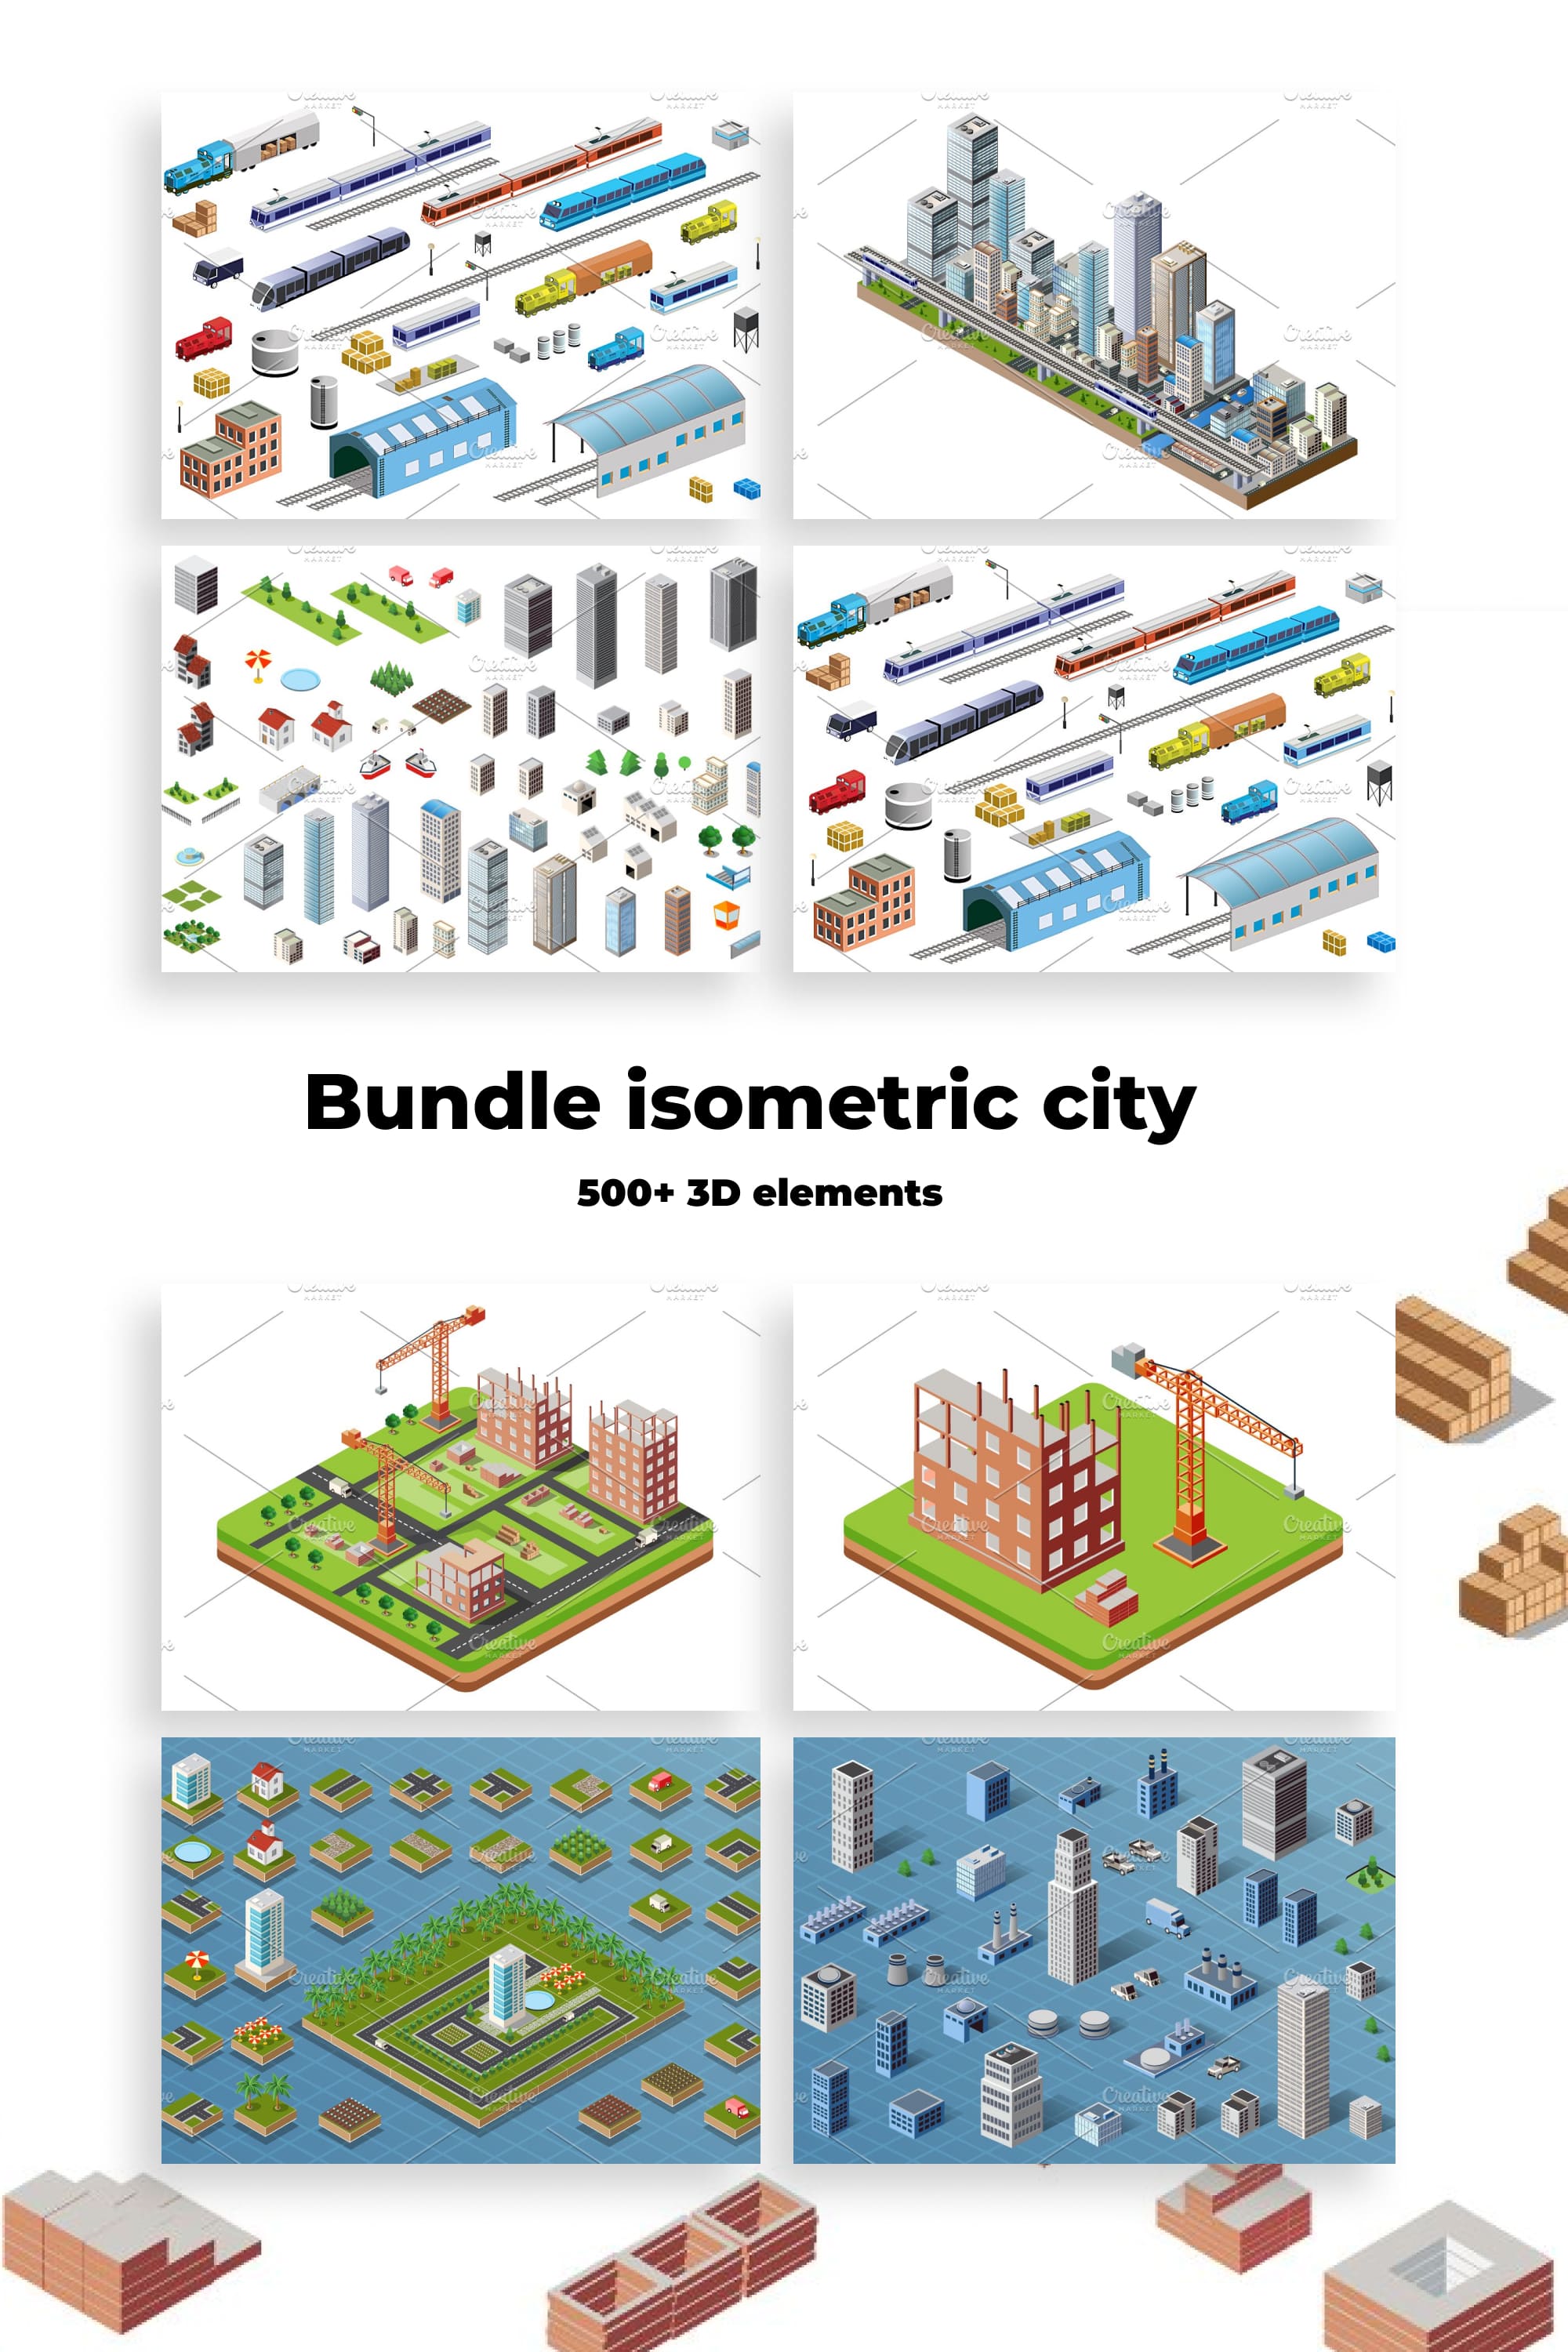 bundle isometric city pinterest.